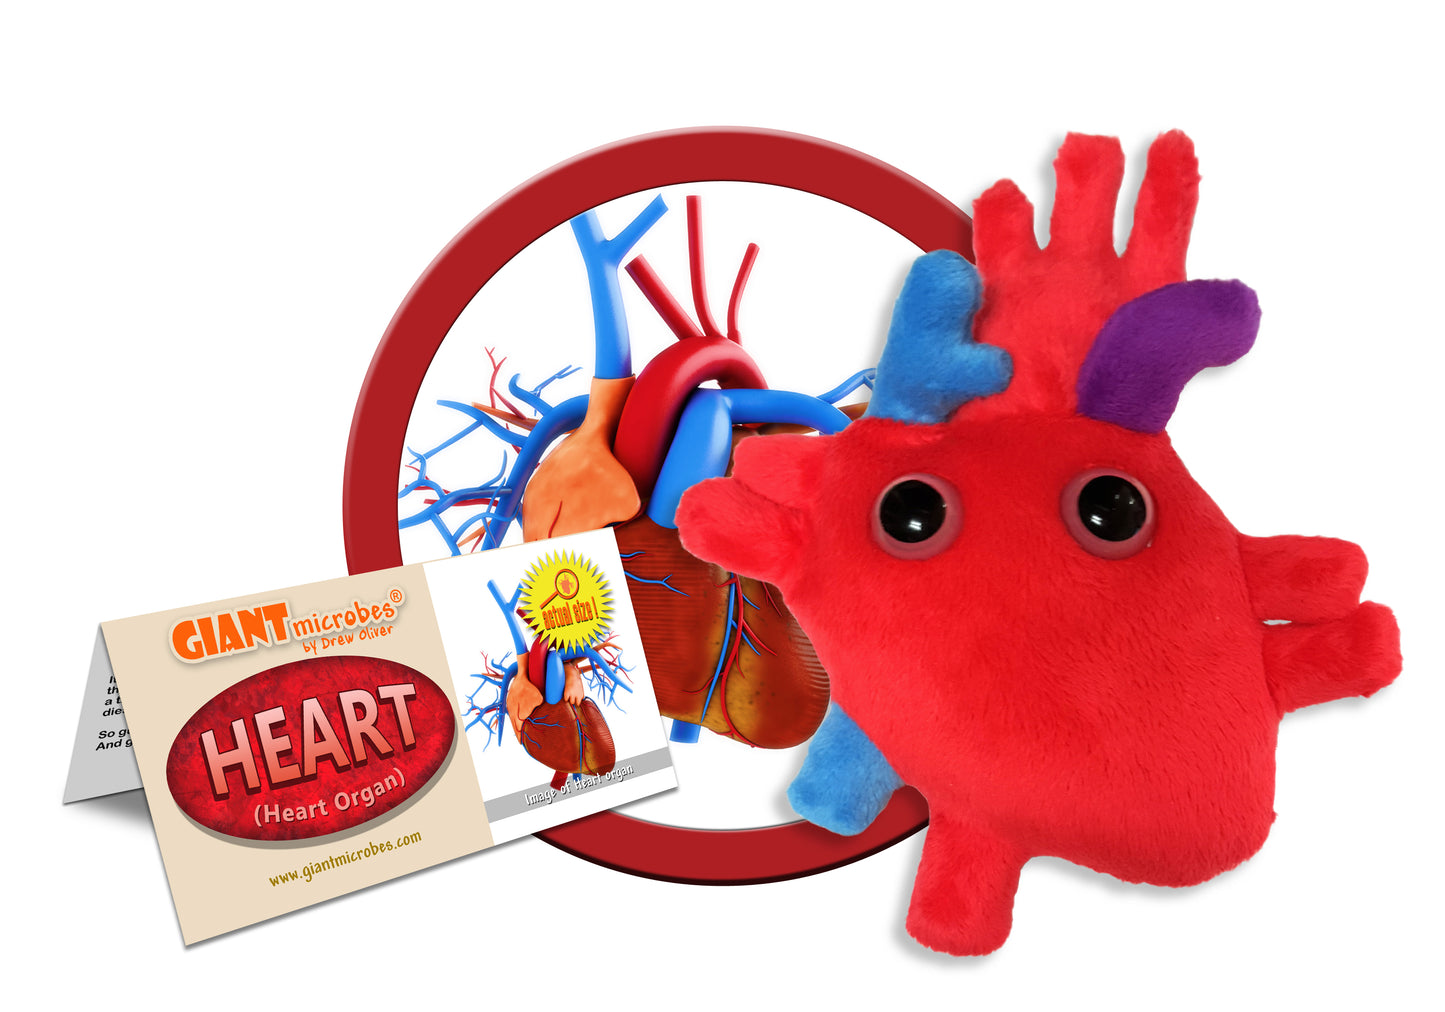 Heart (Heart Organ)